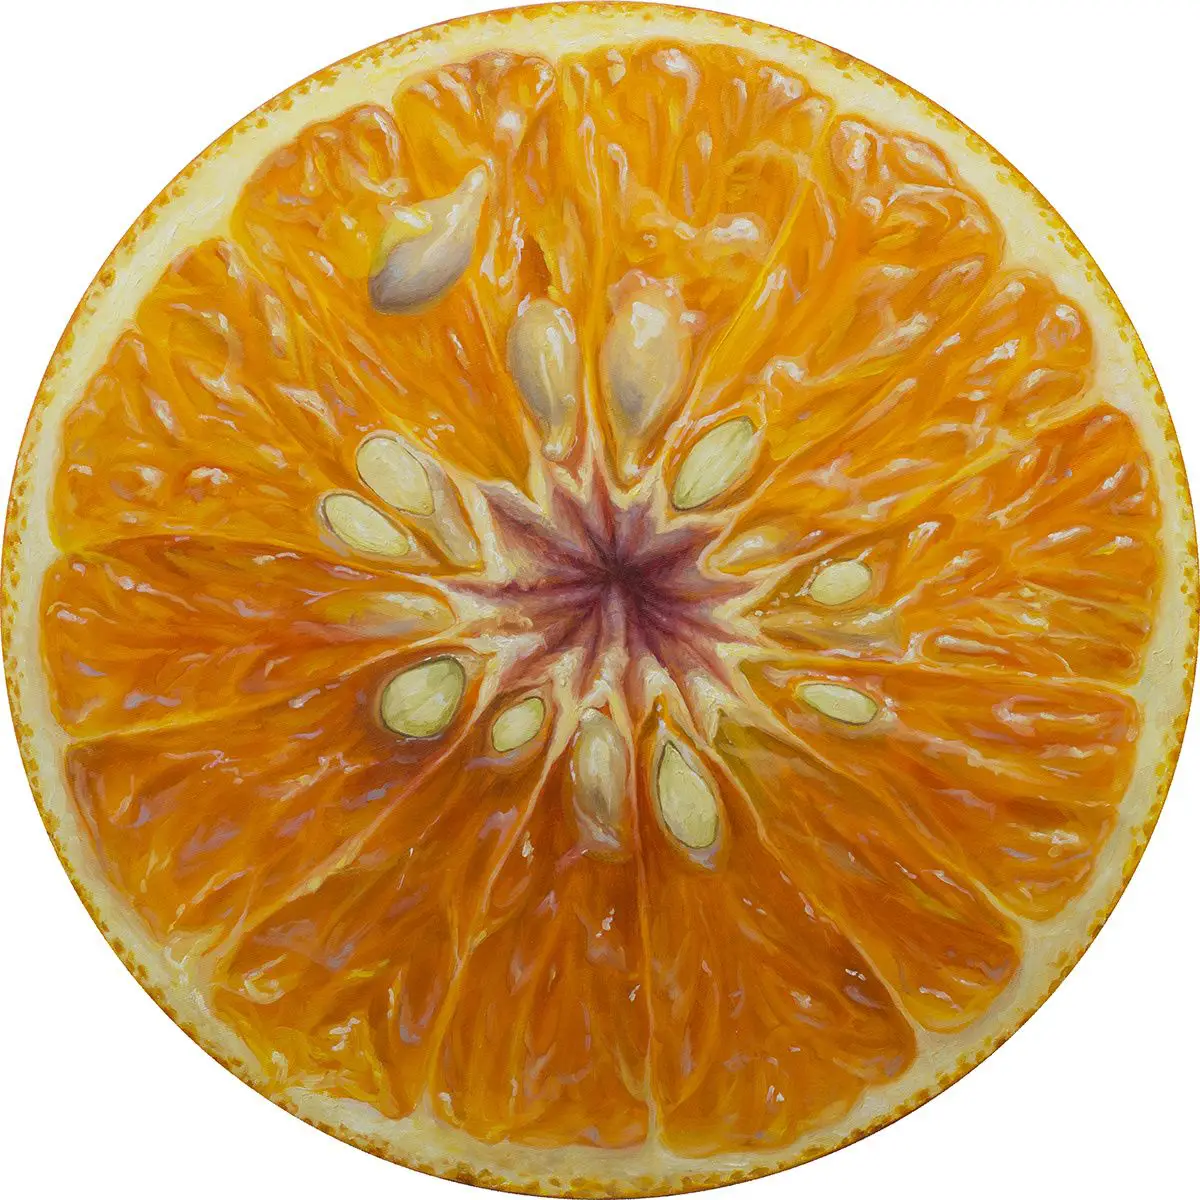 naranja alonsa guevara